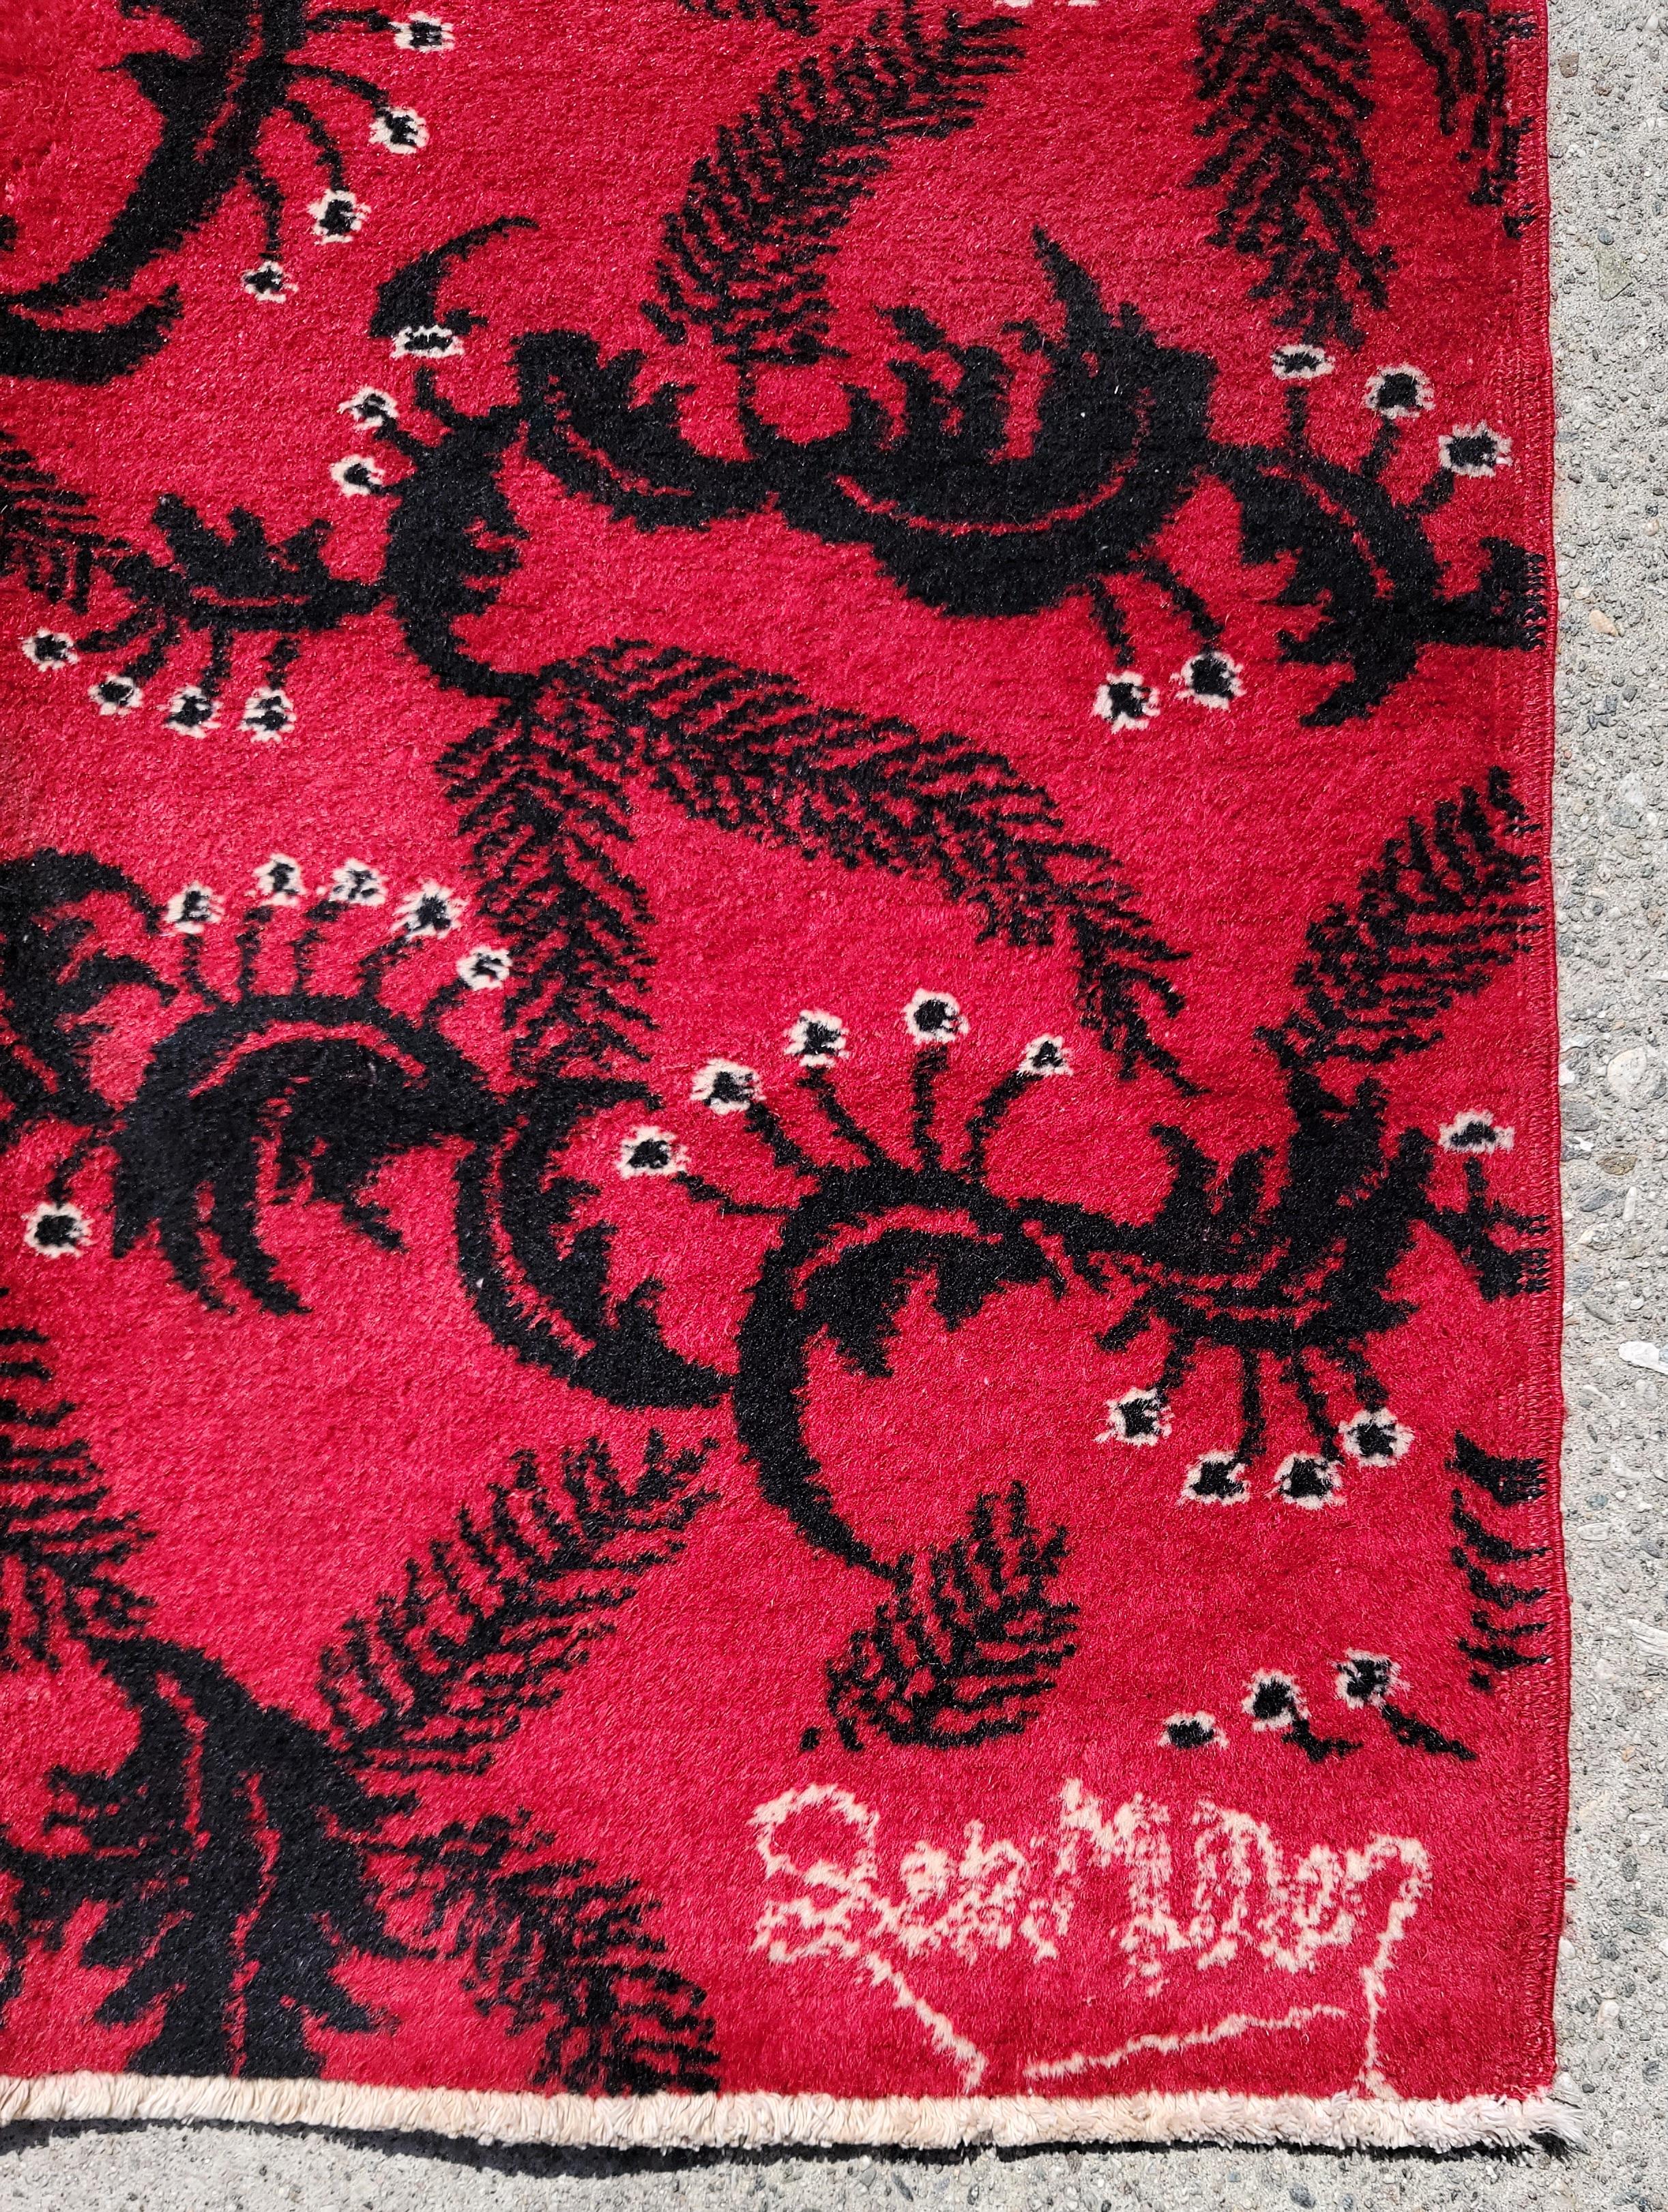 Red and Black Signed Zeki Muren Rug In Good Condition For Sale In Pasadena, CA